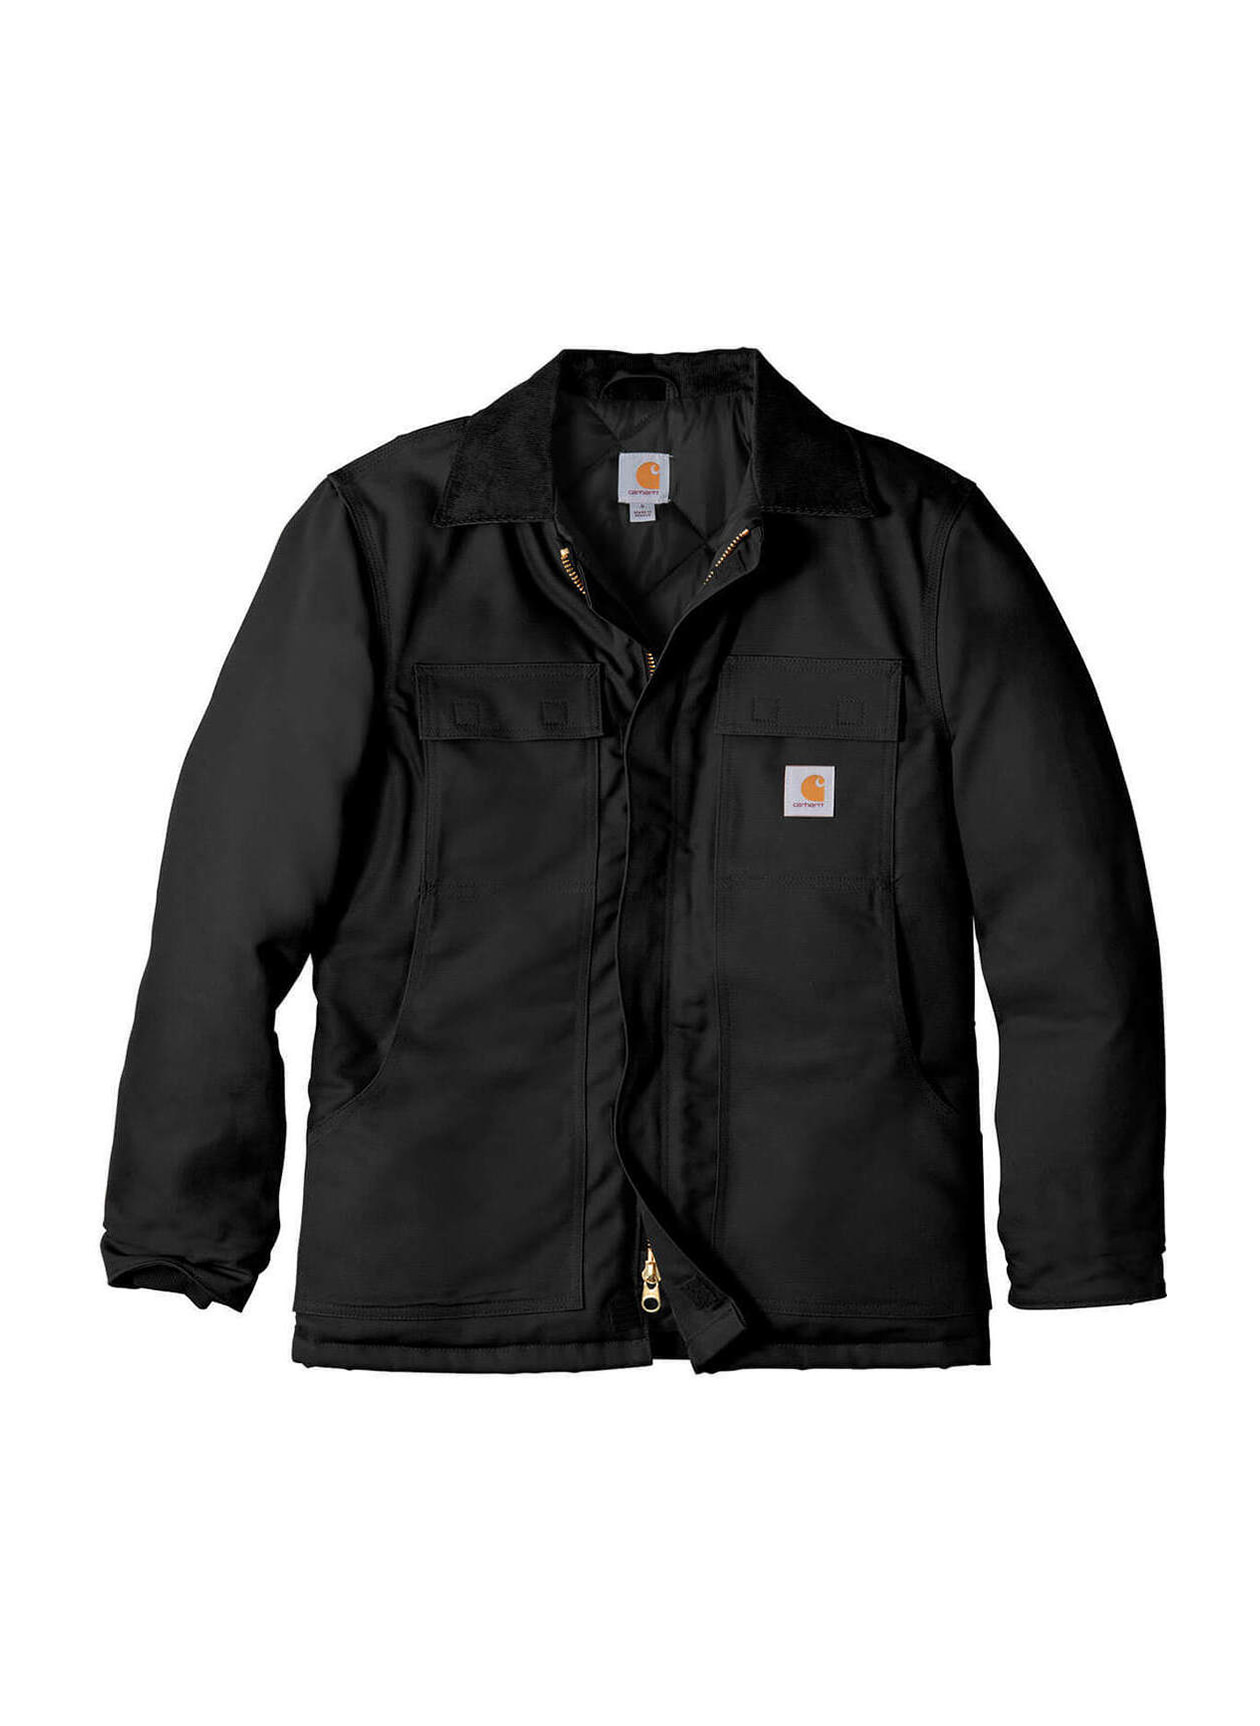 Custom Carhartt, Workwear and Custom Work Jackets with Your Logo